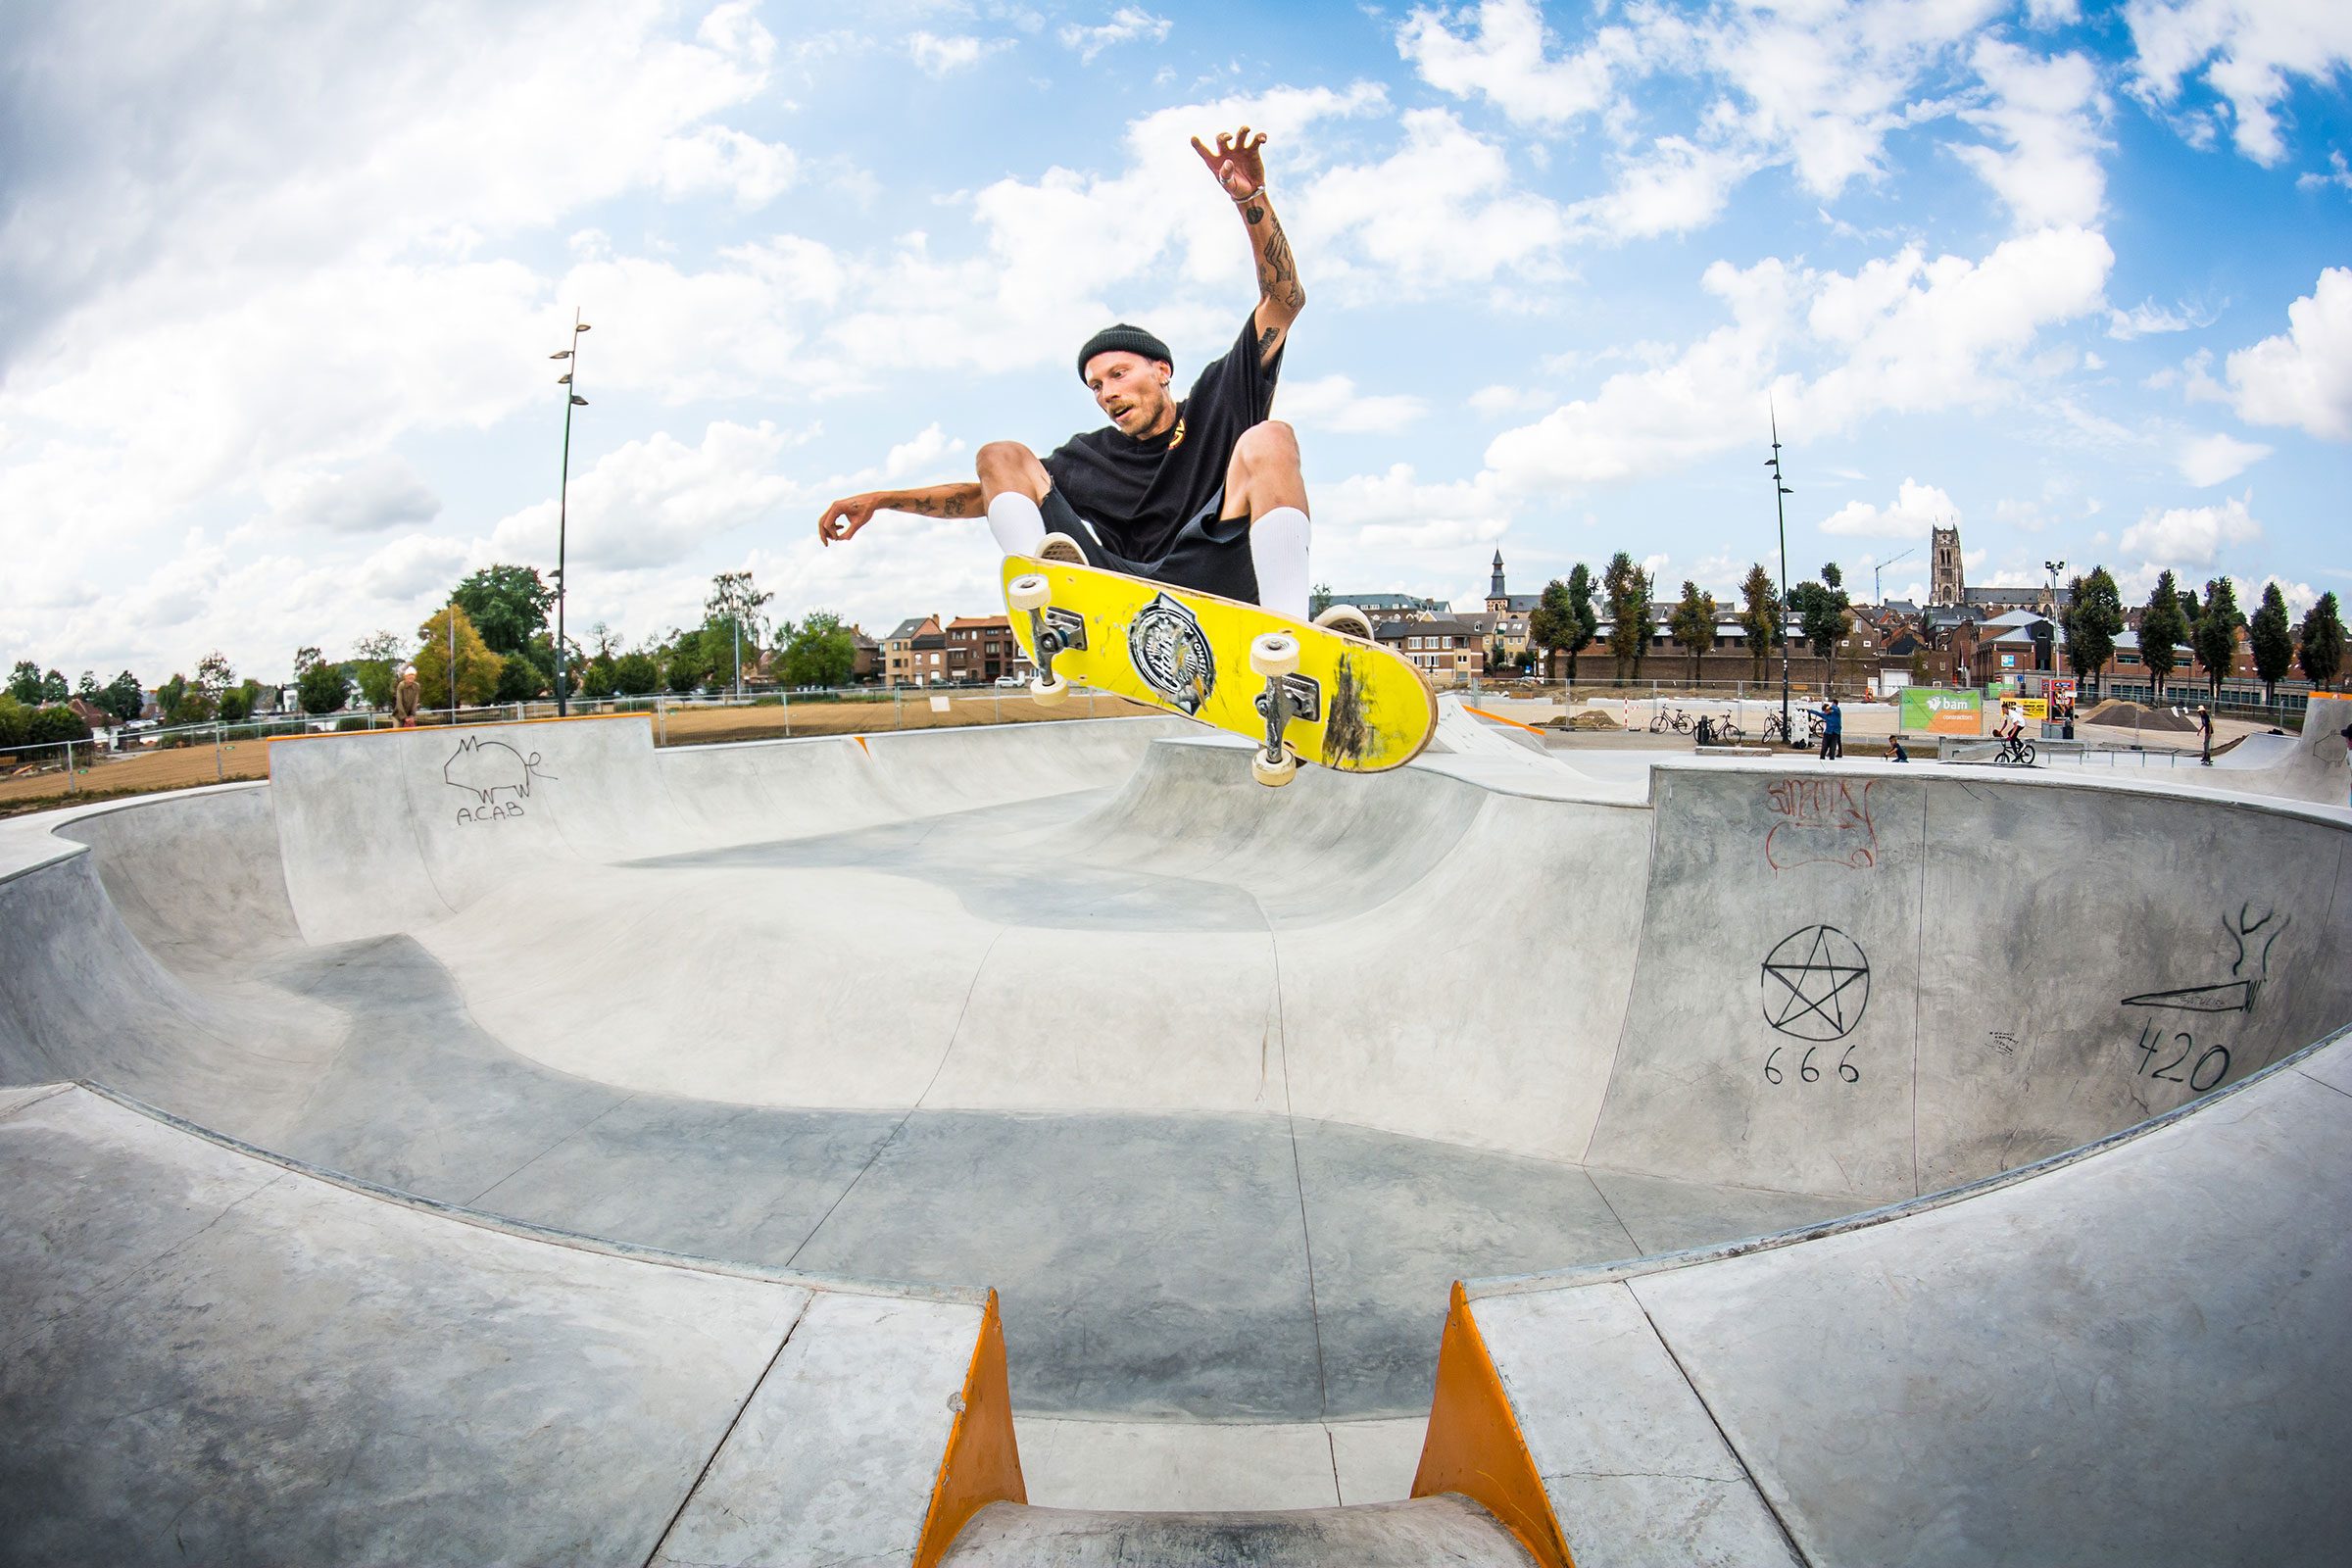 bs 180 by @jrobert.riga at Skatepark Tongeren Photo by @jove1973